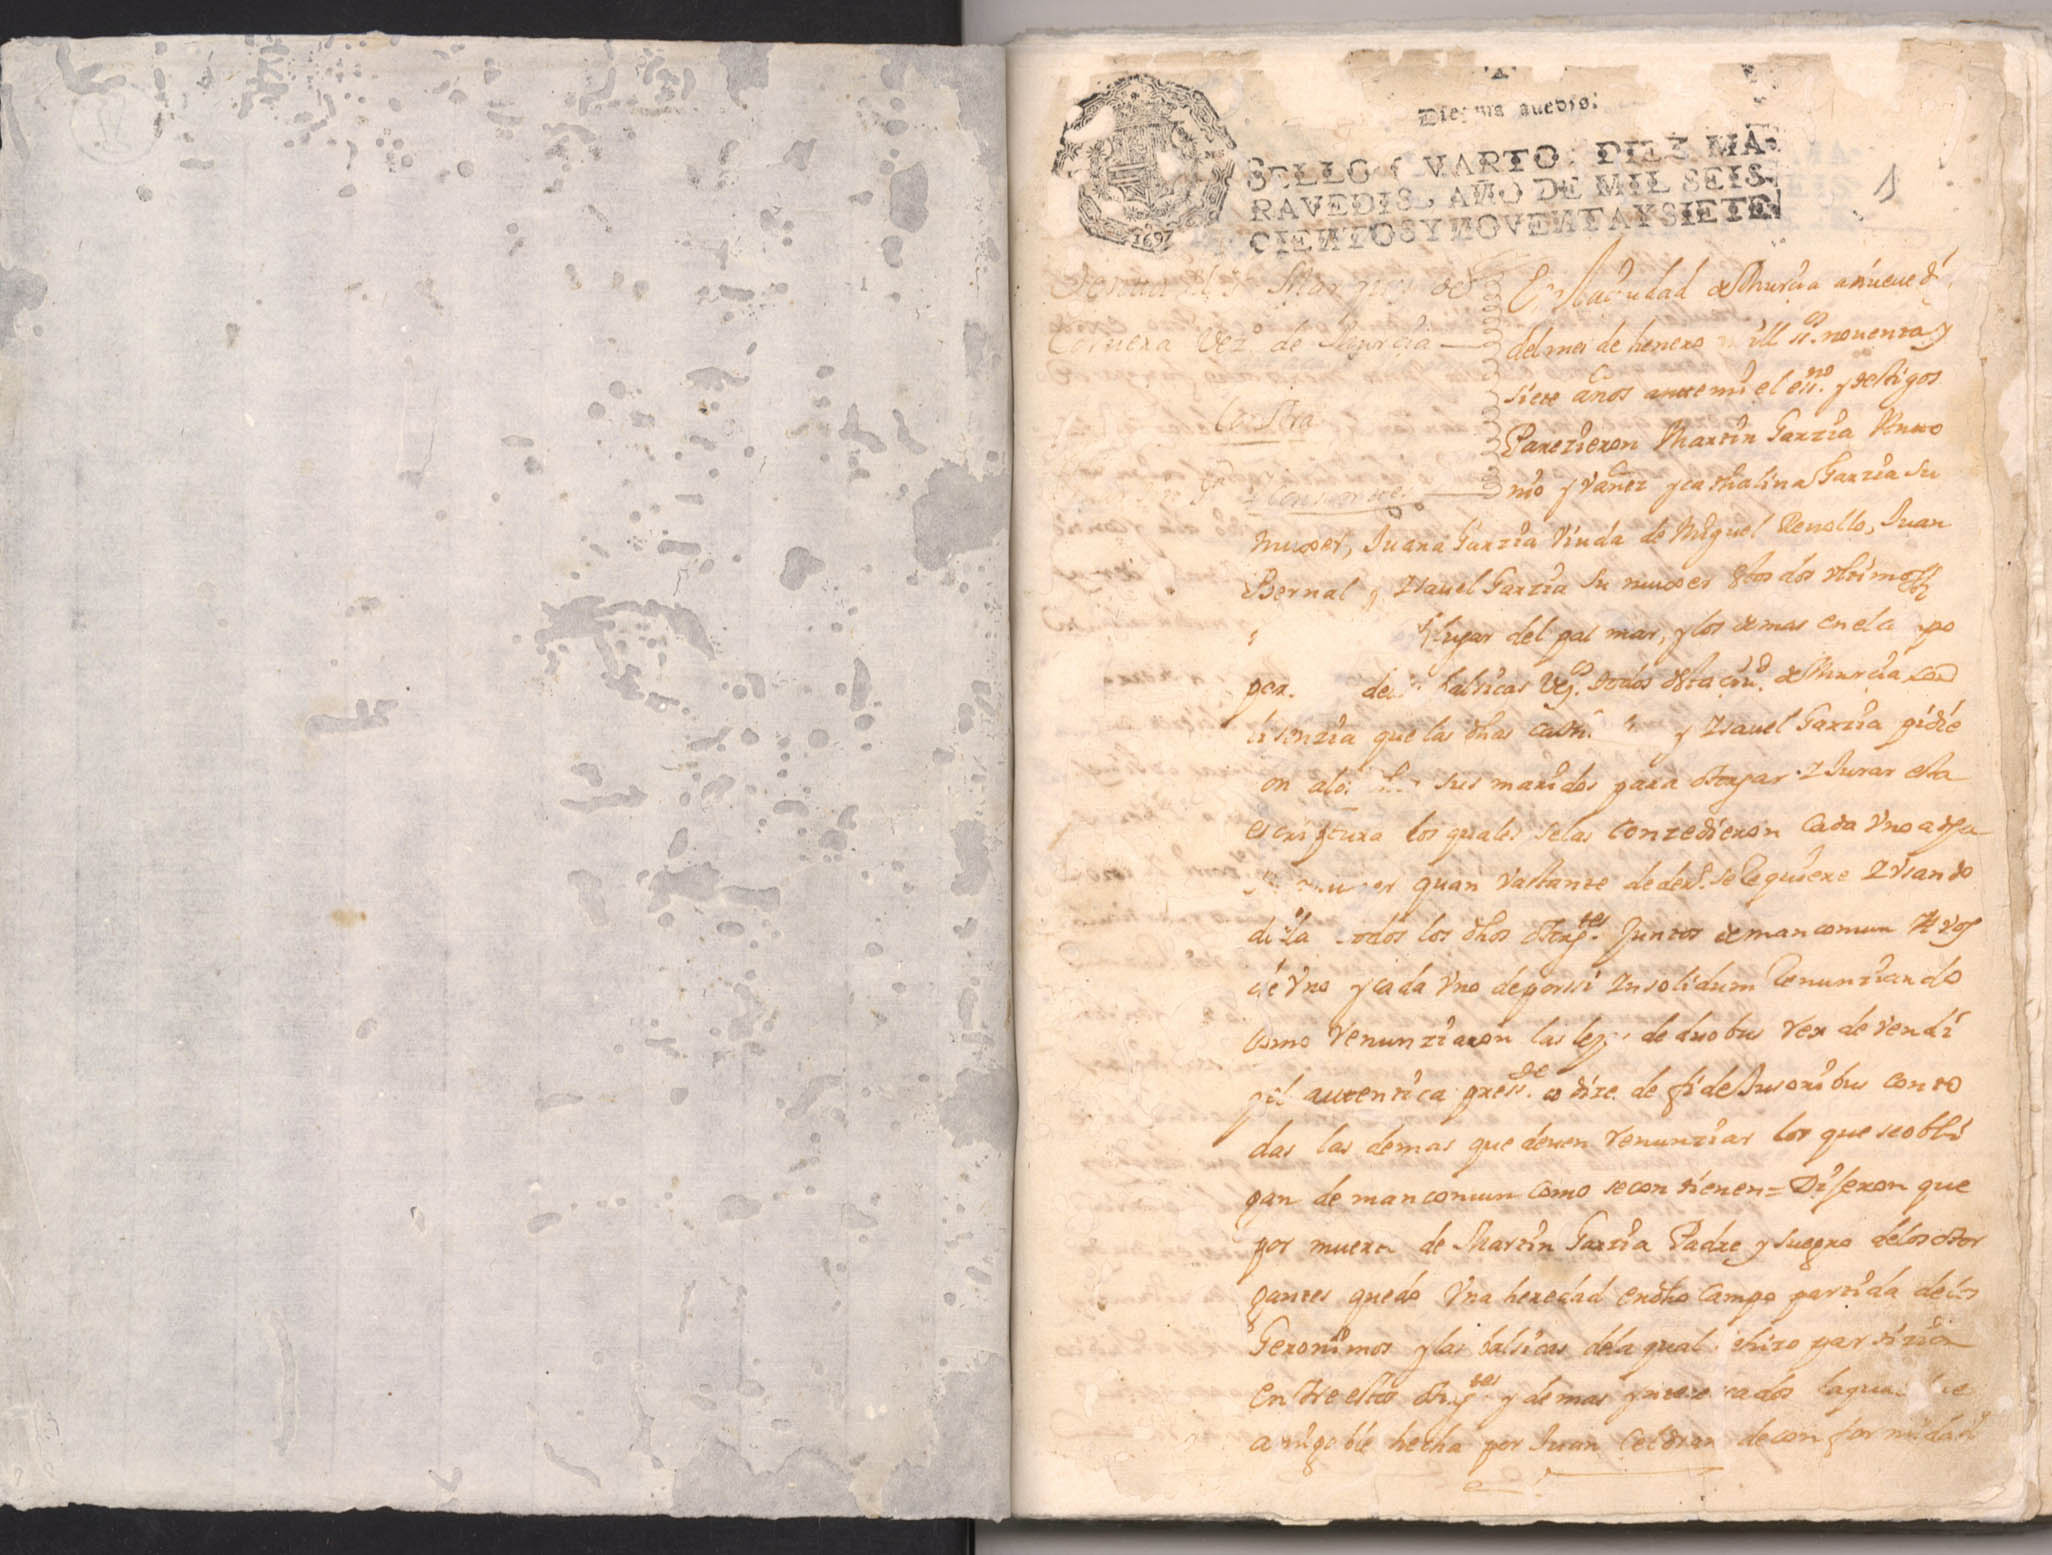 Registro de Alejandro Navarro Carreño, Murcia de 1697.